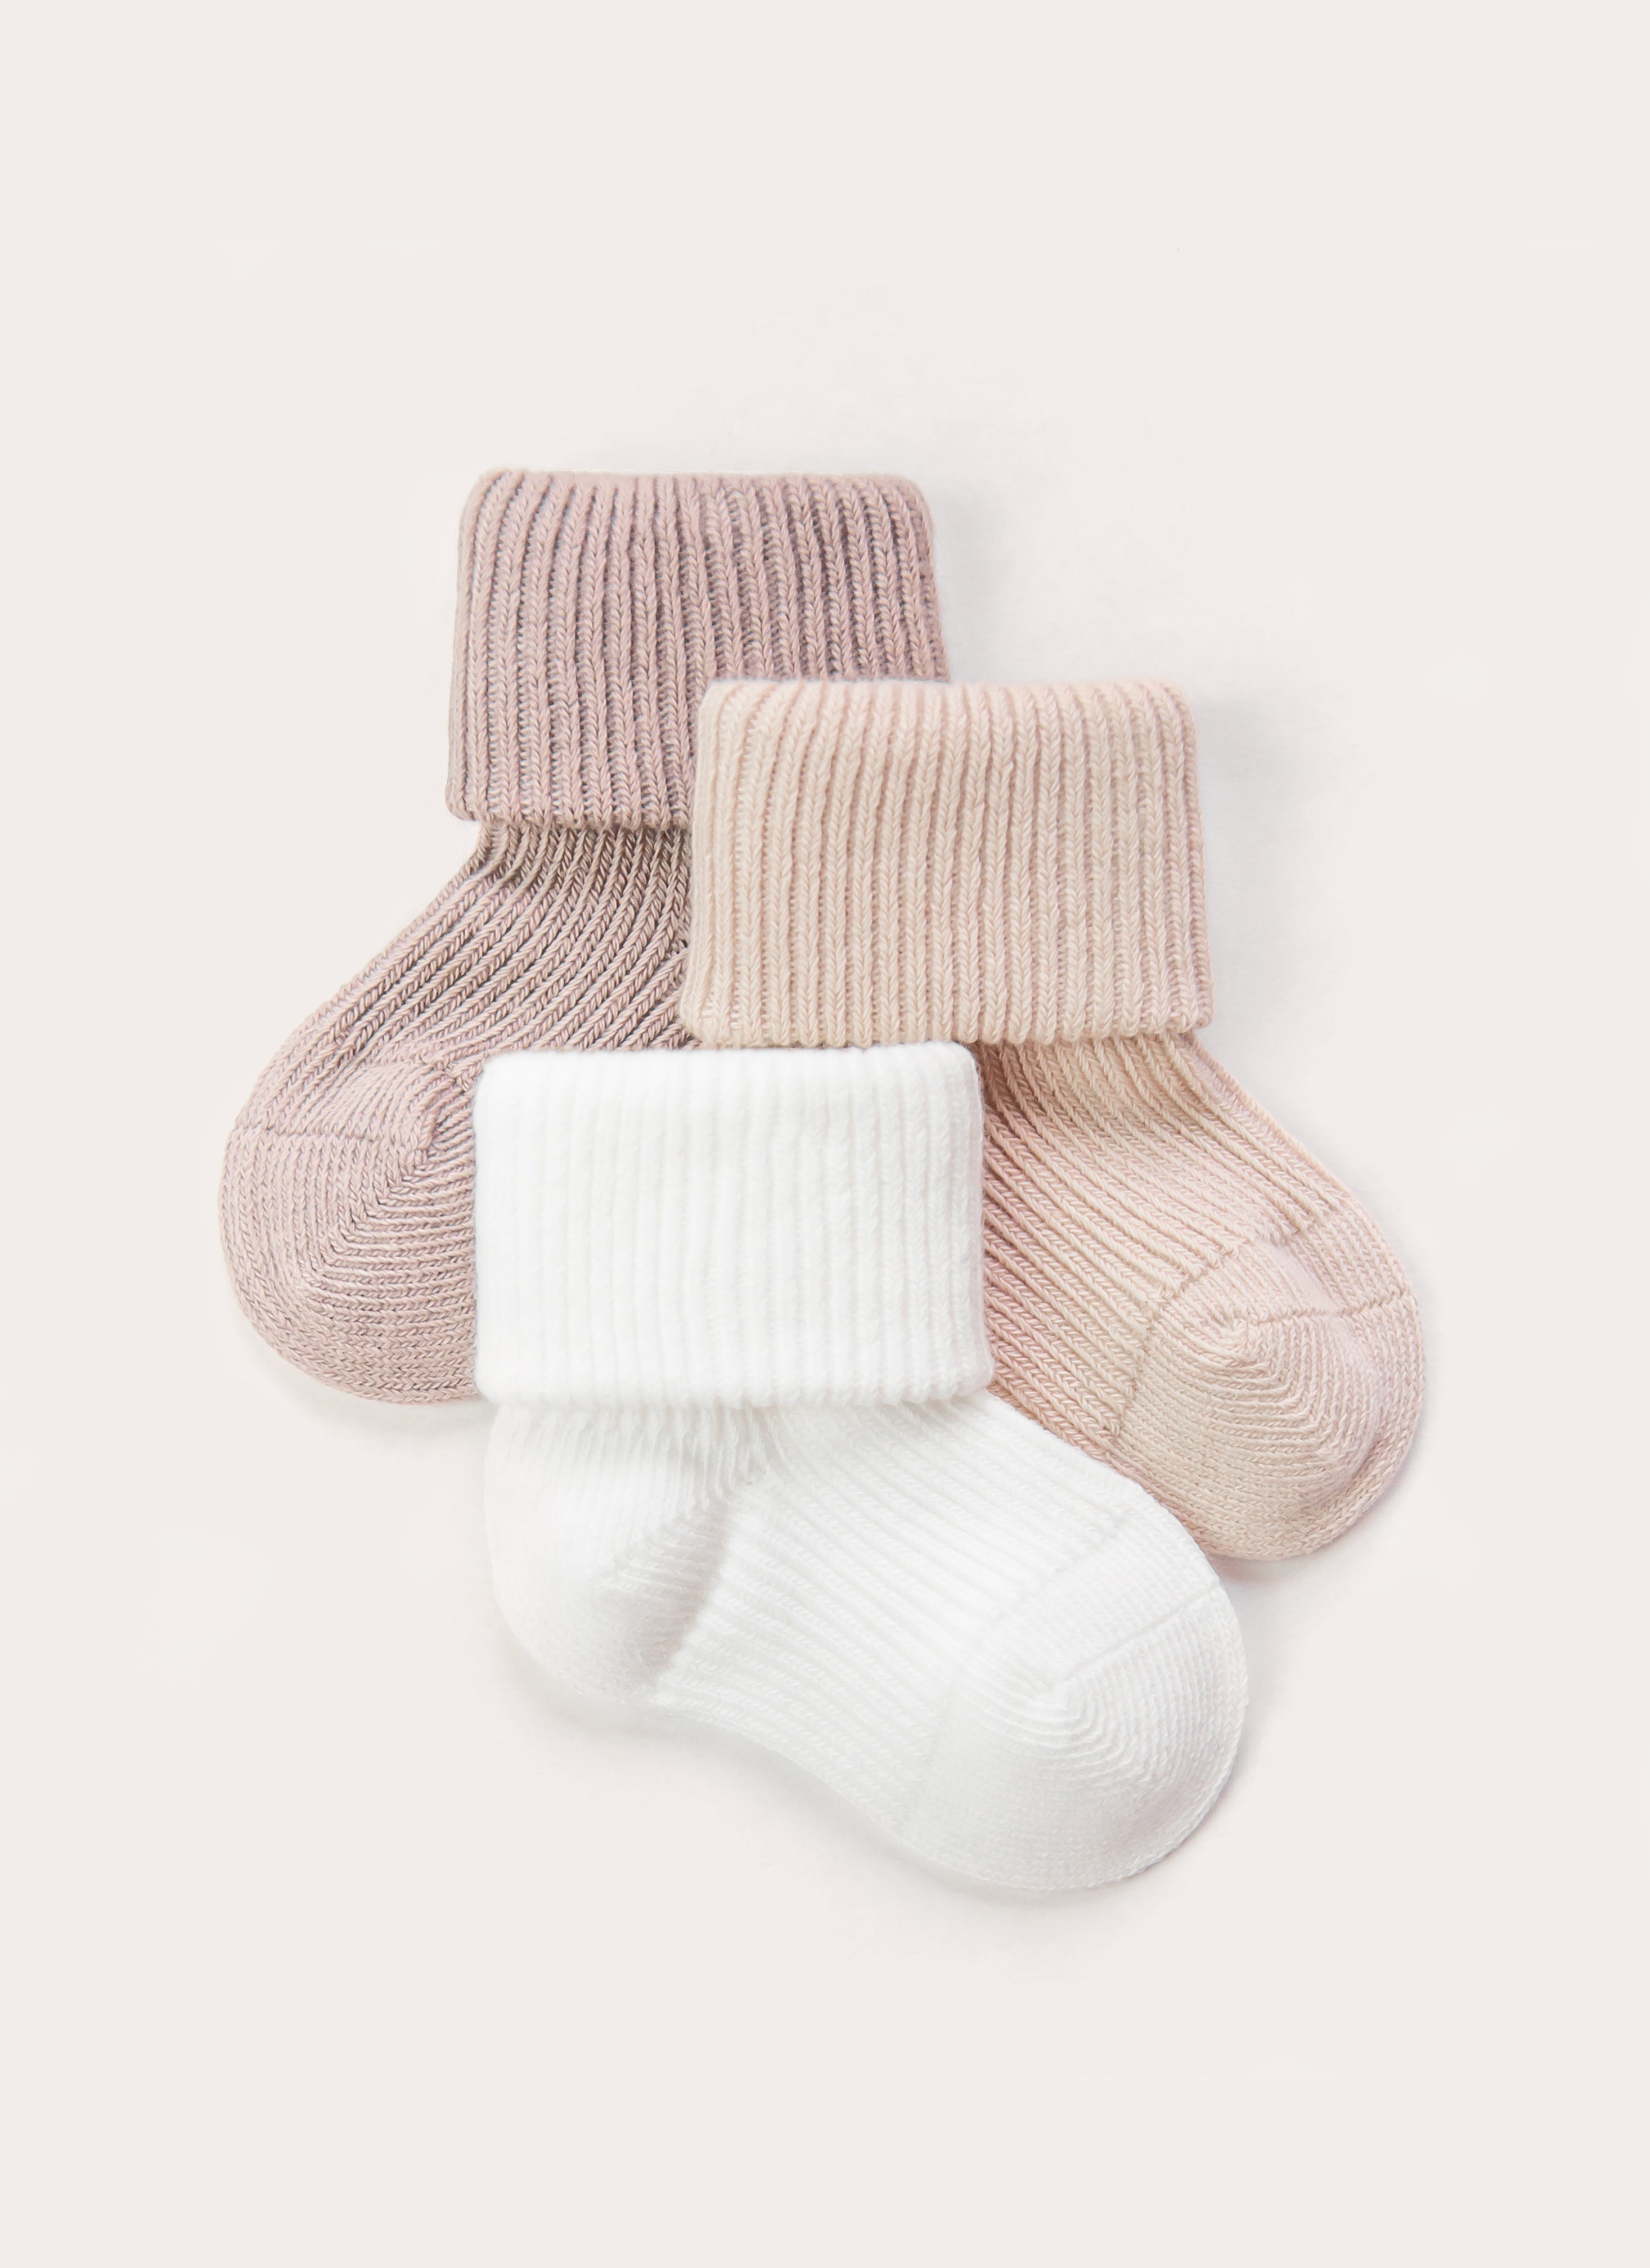 Soft Cotton Socks 3PC/Set (Brown, Nude, White)